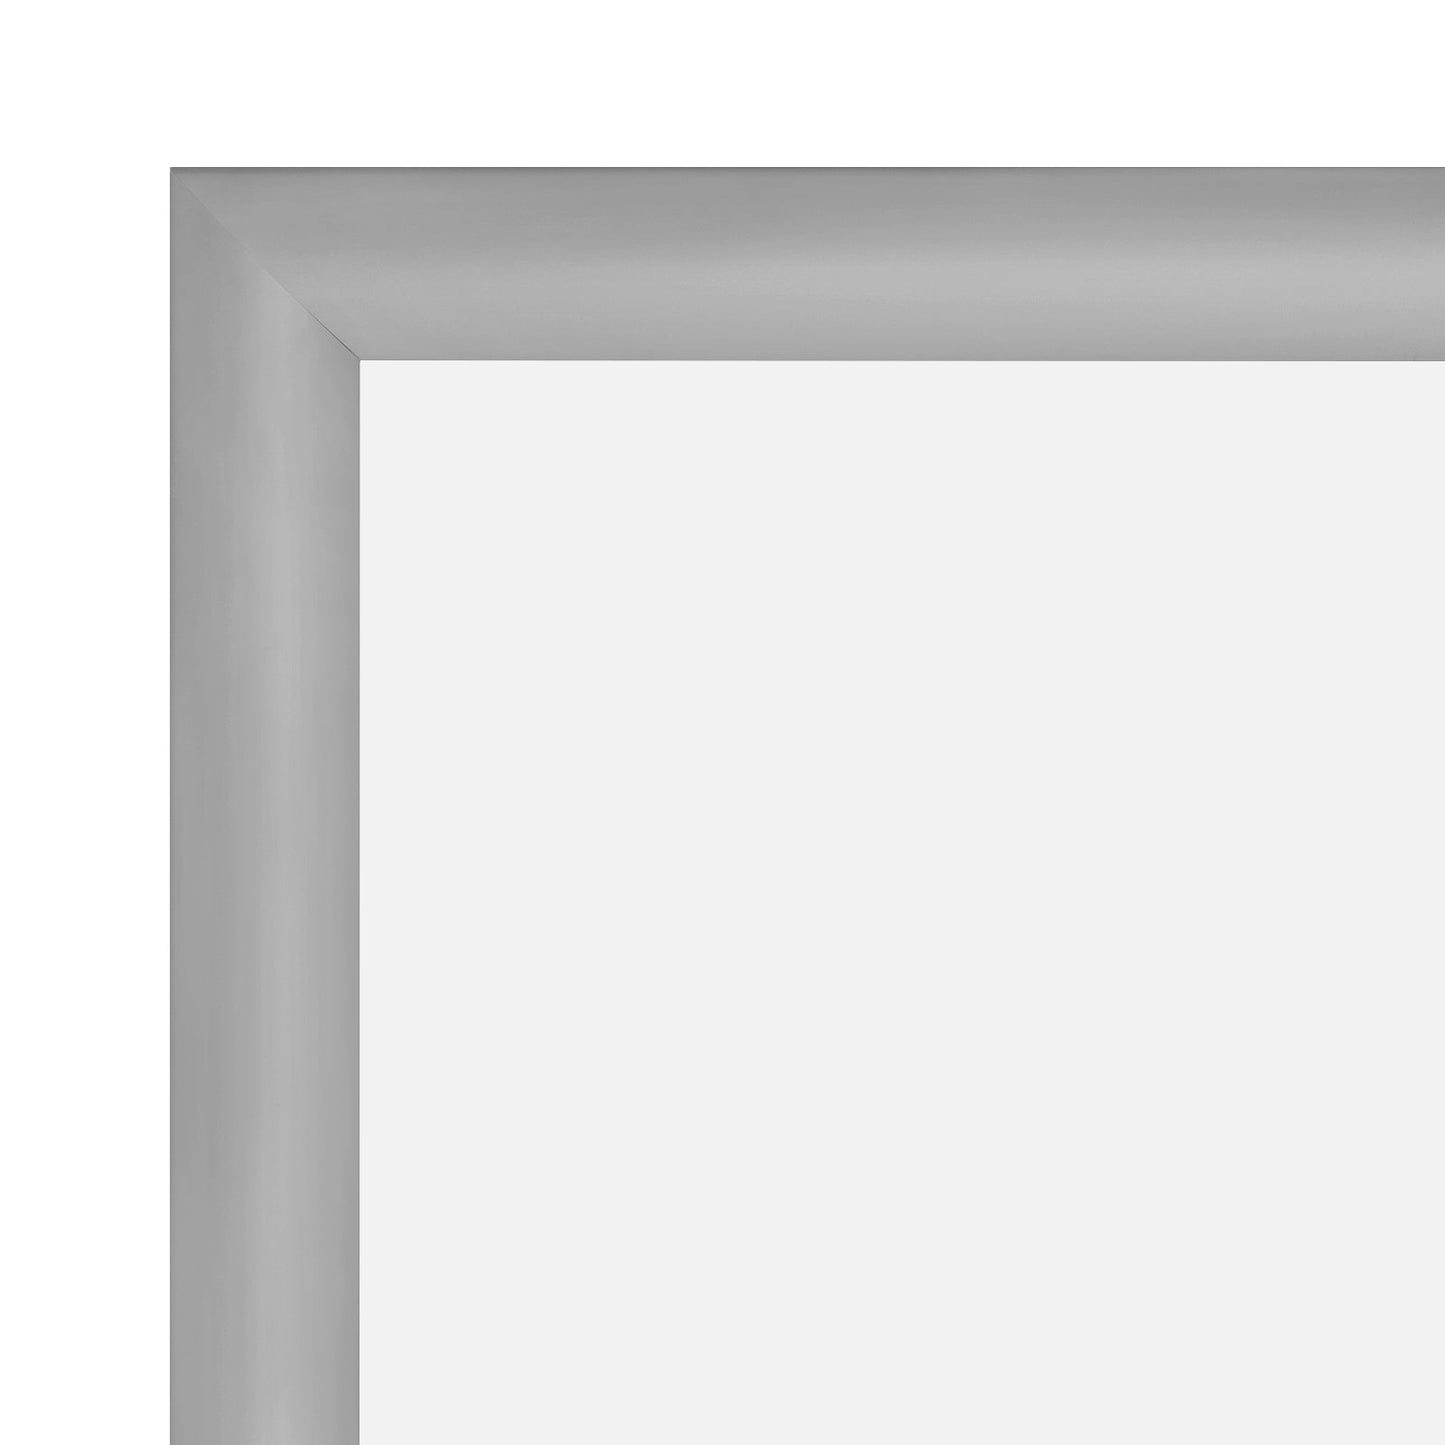 11x15 Silver SnapeZo® Snap Frame - 1.2" Profile - Snap Frames Direct